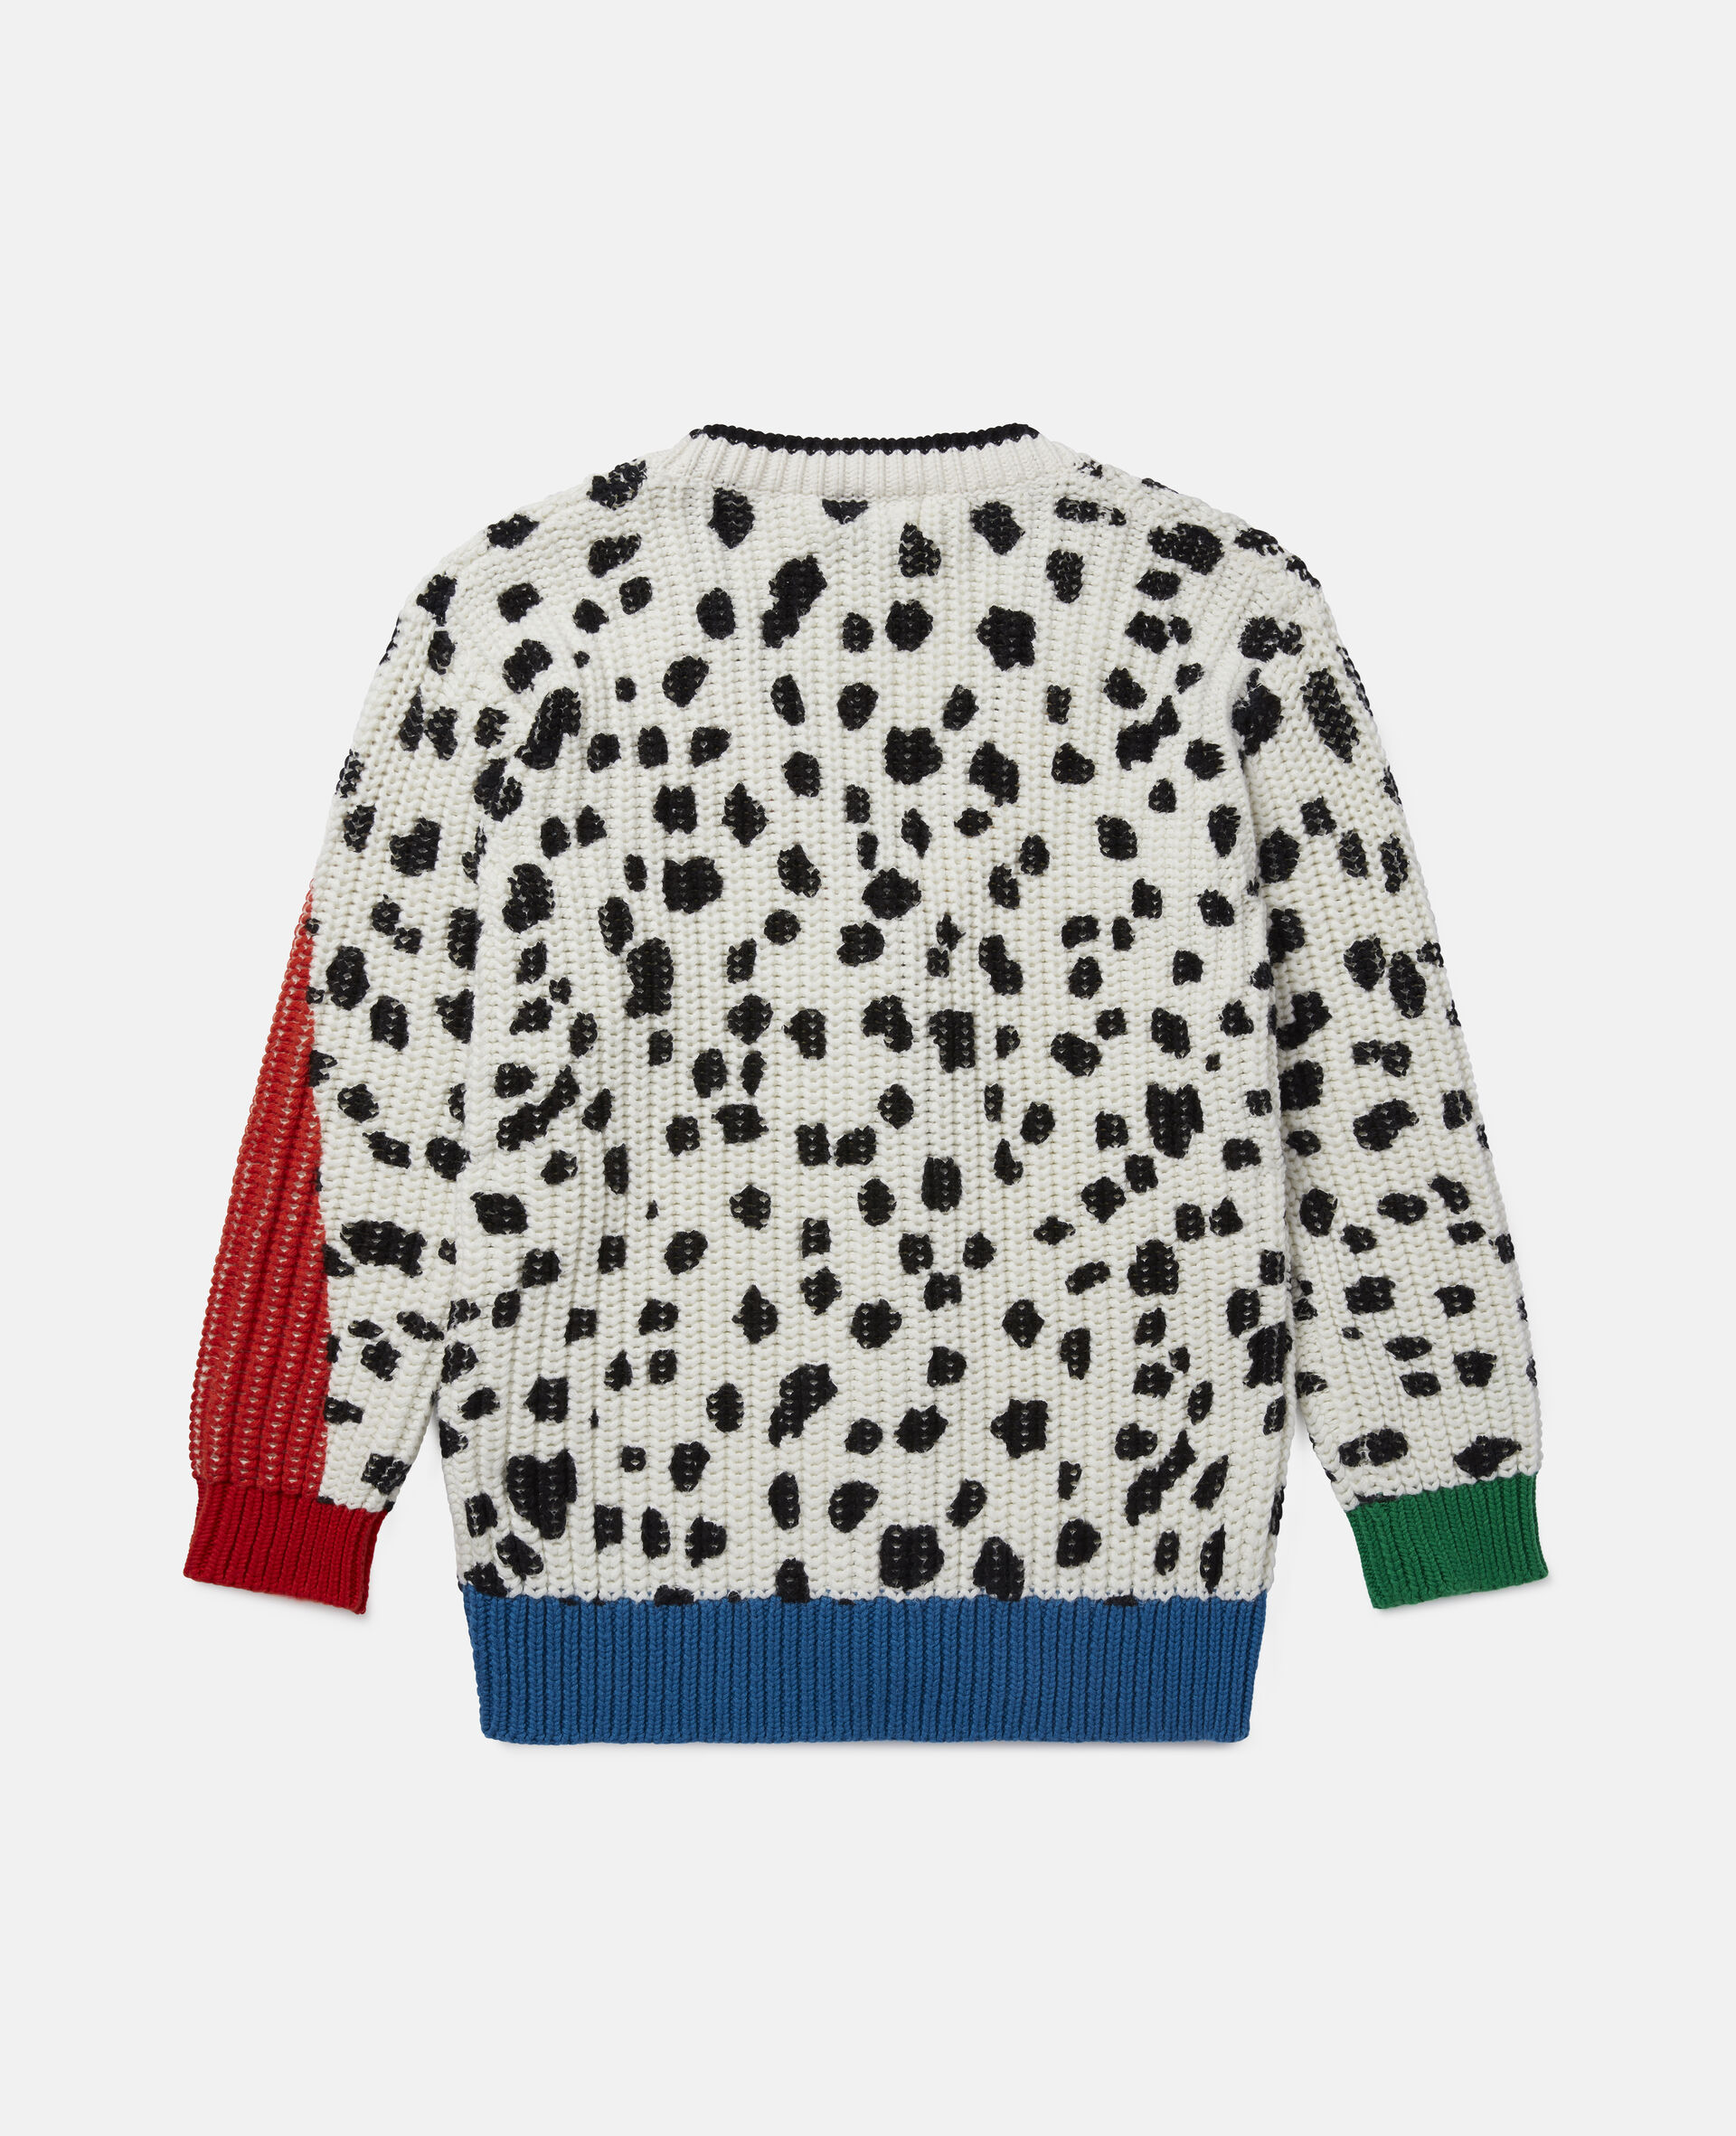 Dalmatian Spots Knit Cardigan -Multicolour-large image number 3